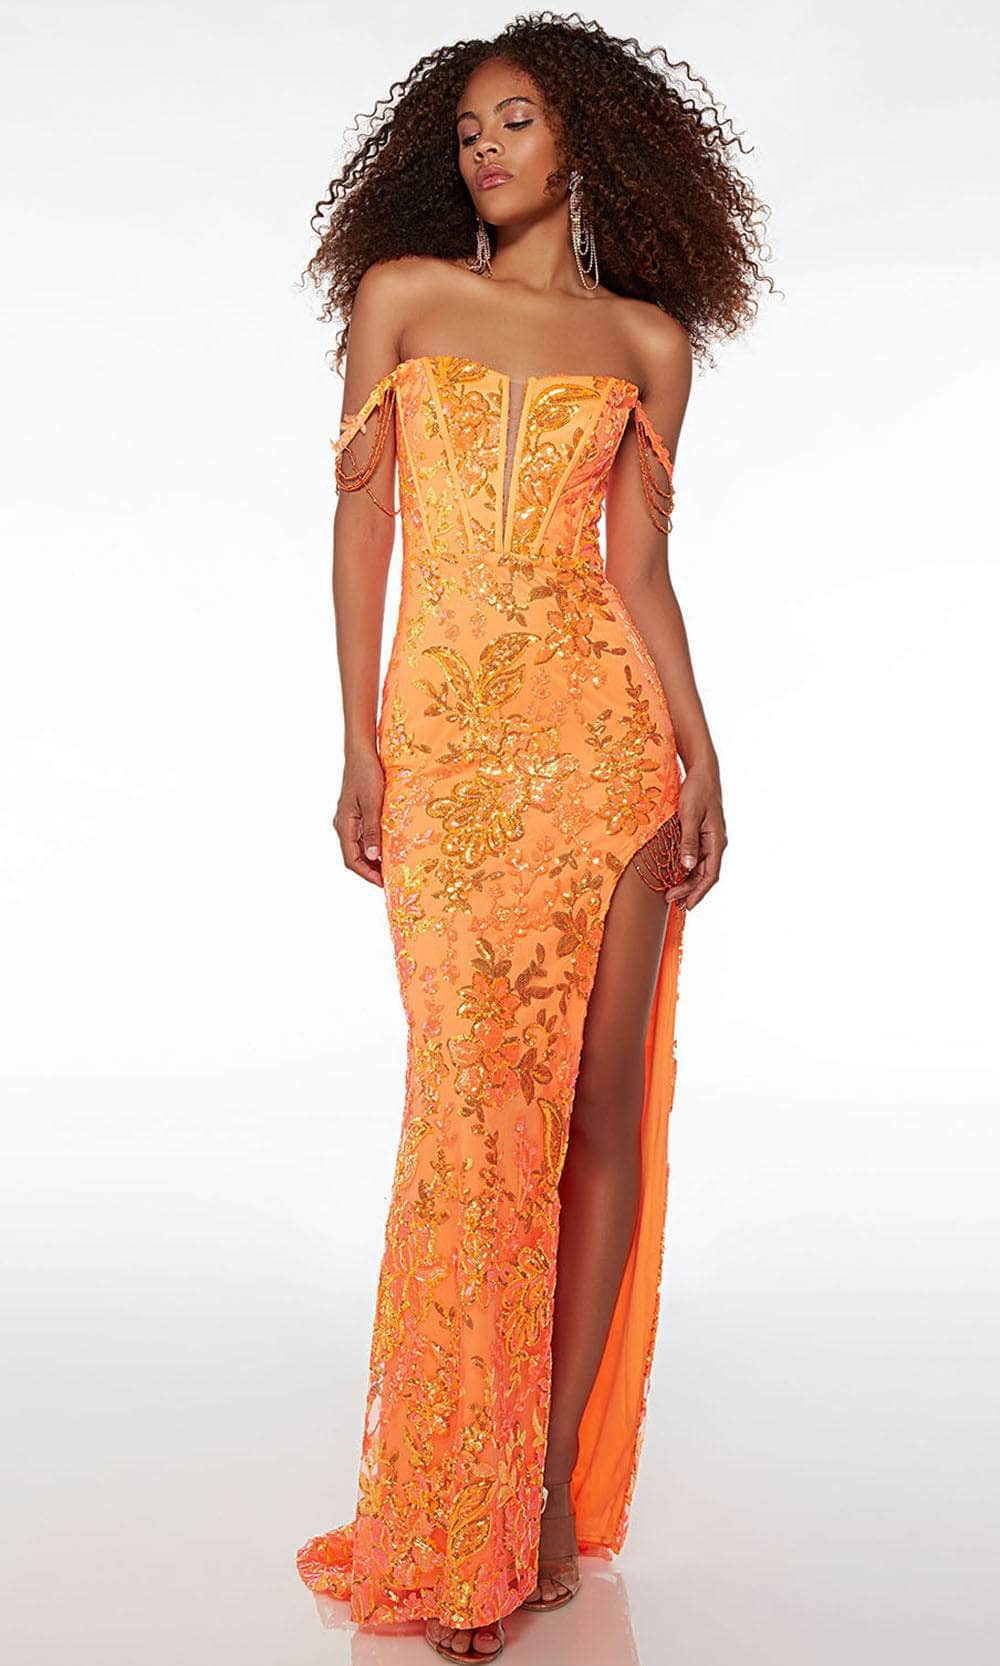 Image of Alyce Paris 61550 - Sequin Embellished Corset Prom Dress